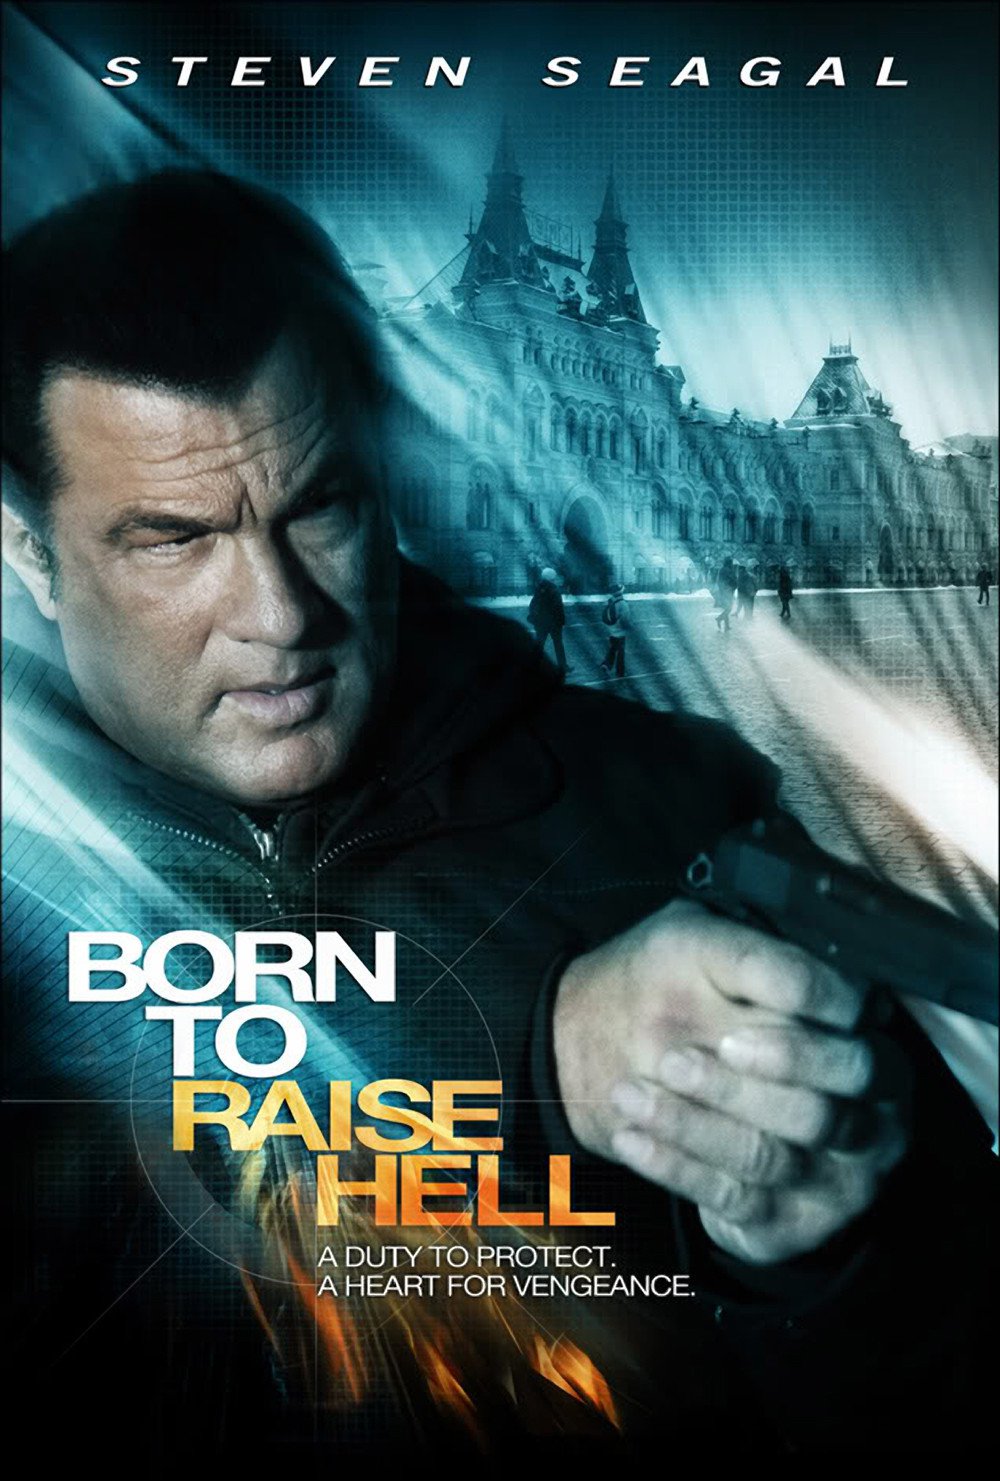 Plakat von "Born to Raise Hell"